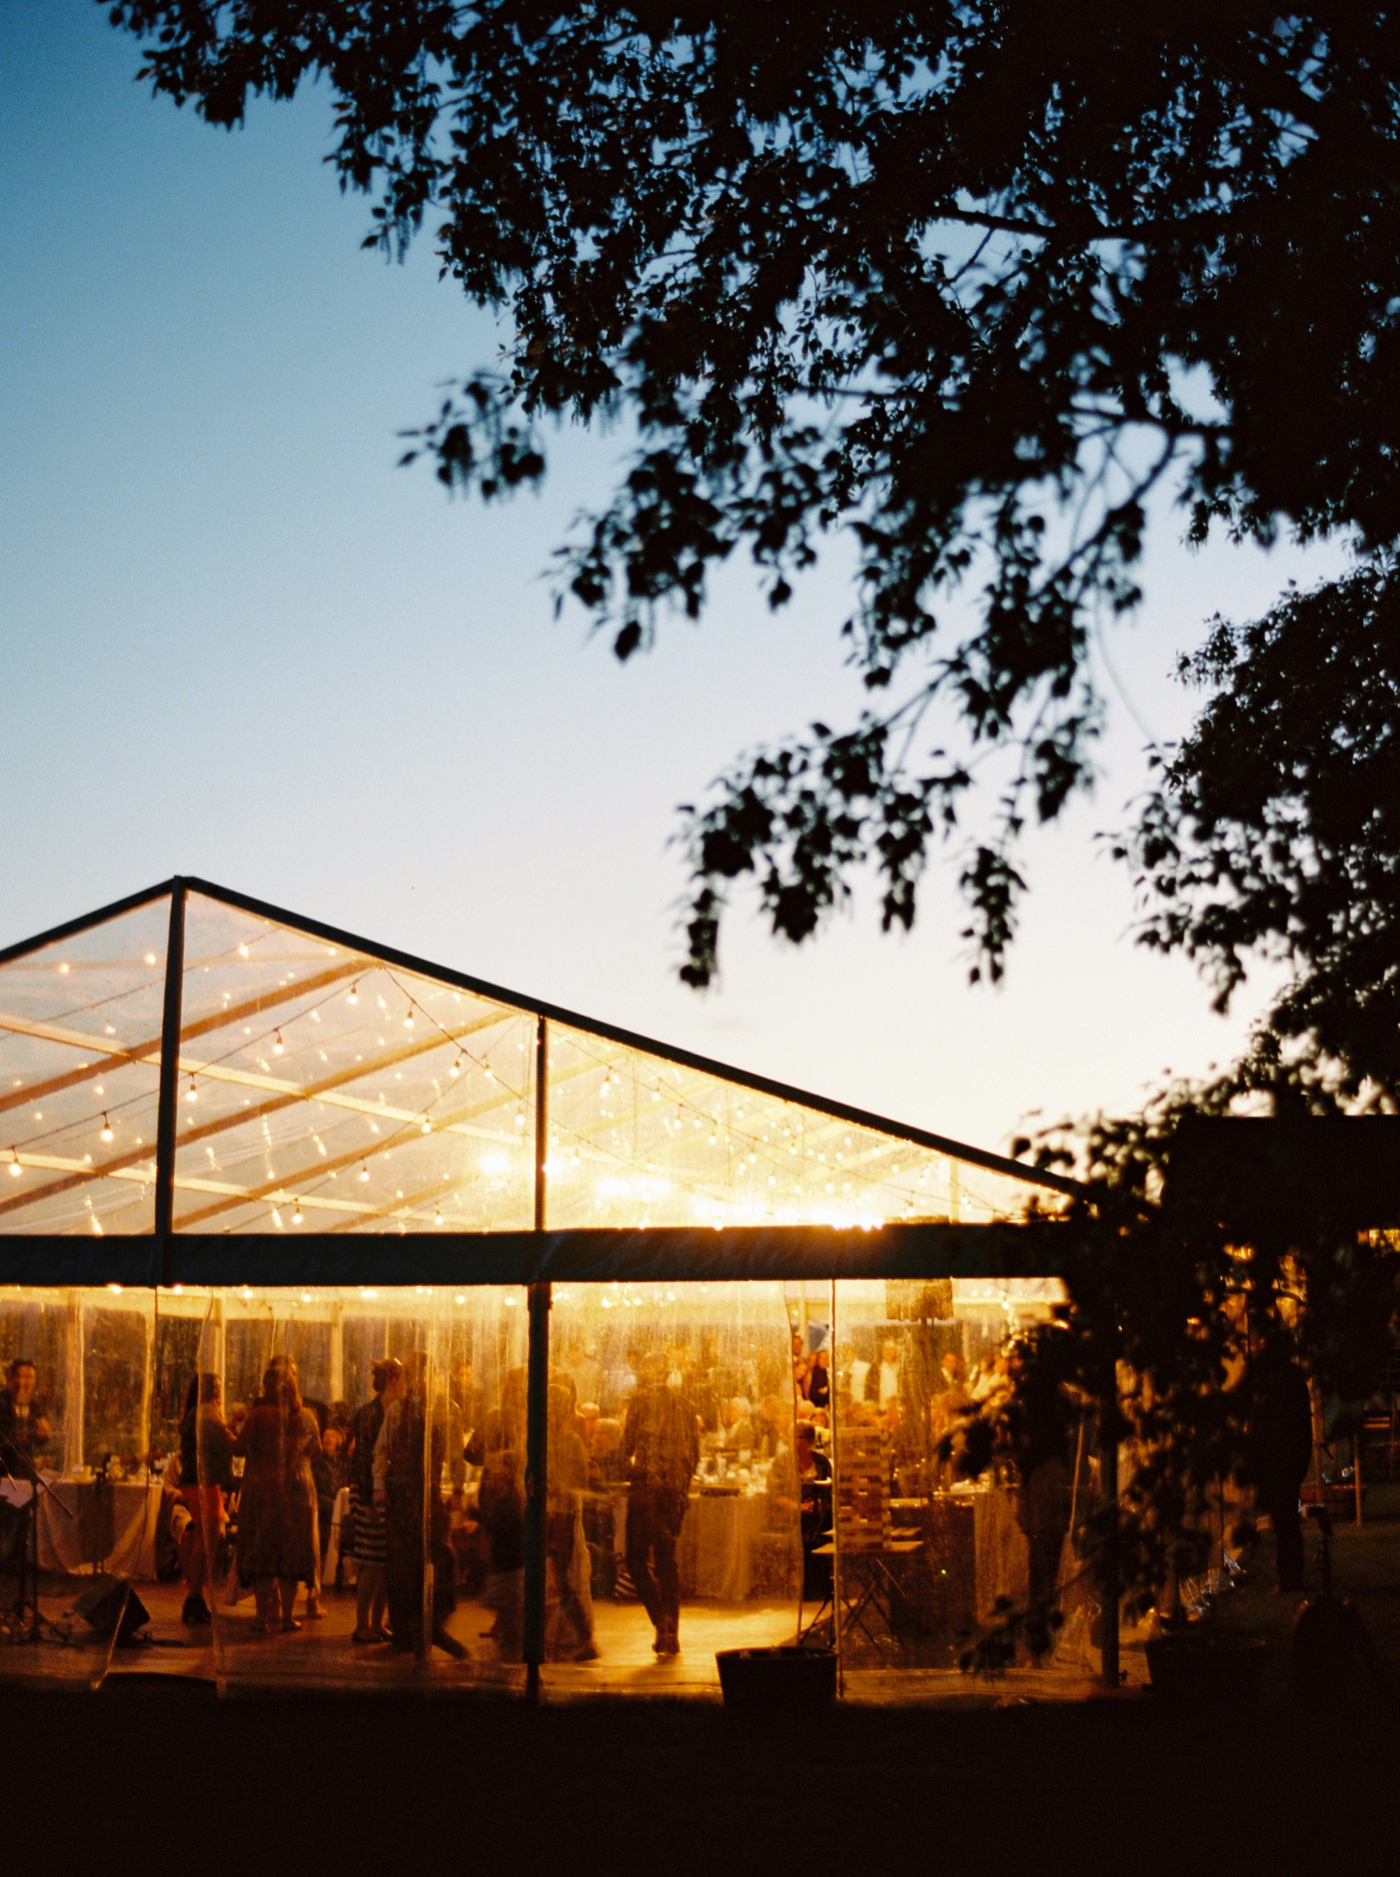 Calgary wedding photographers | The Gathered Farm Wedding | Justine milton fine art film photographer | clear tent wedding reception first dances